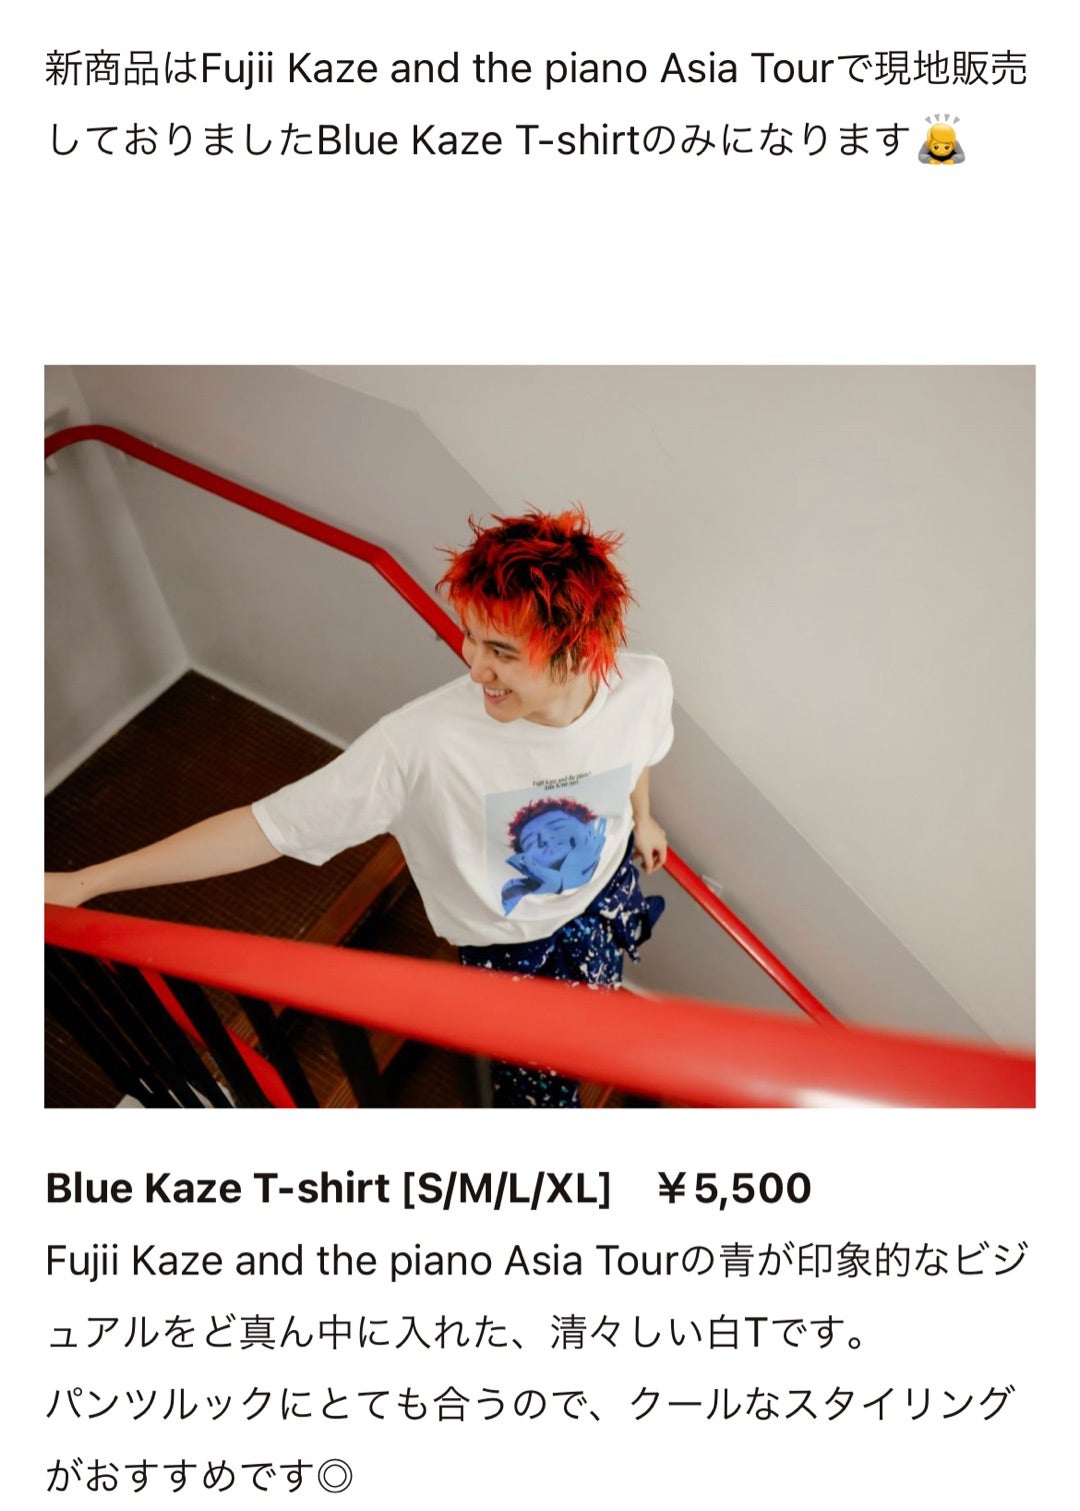 Blue Kaze T-shirt サイズ感について | 三度の飯より藤井風の人〜岡山